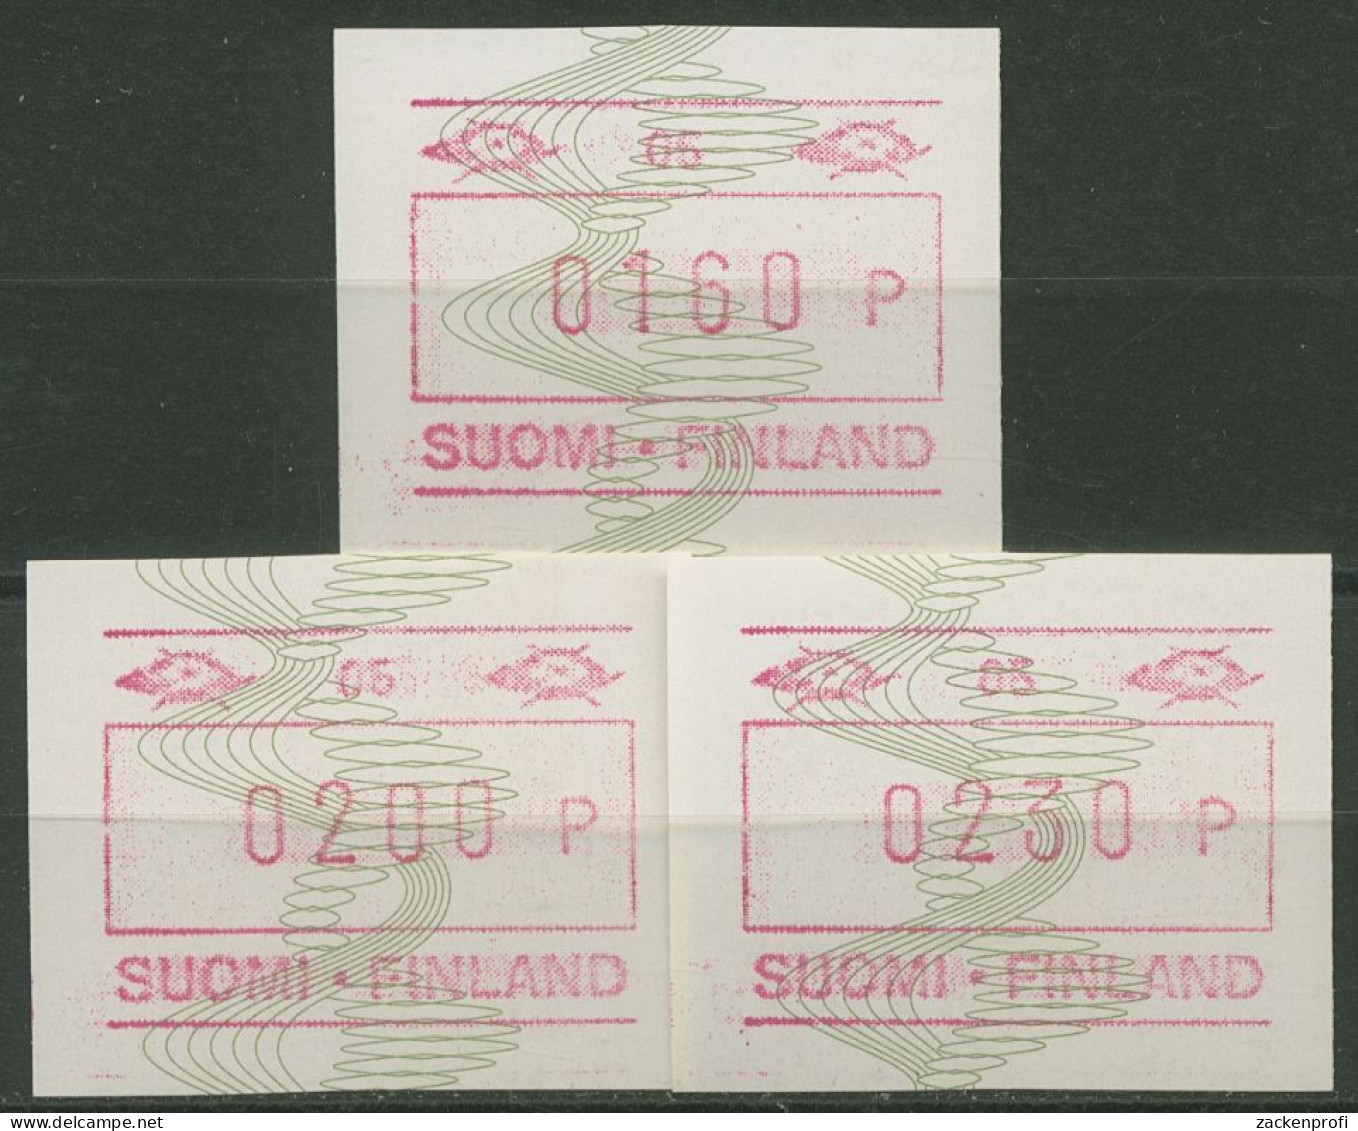 Finnland ATM 1993 Automat 05 Breite Ziffern ATM 14.2 S1 Postfrisch - Viñetas De Franqueo [ATM]